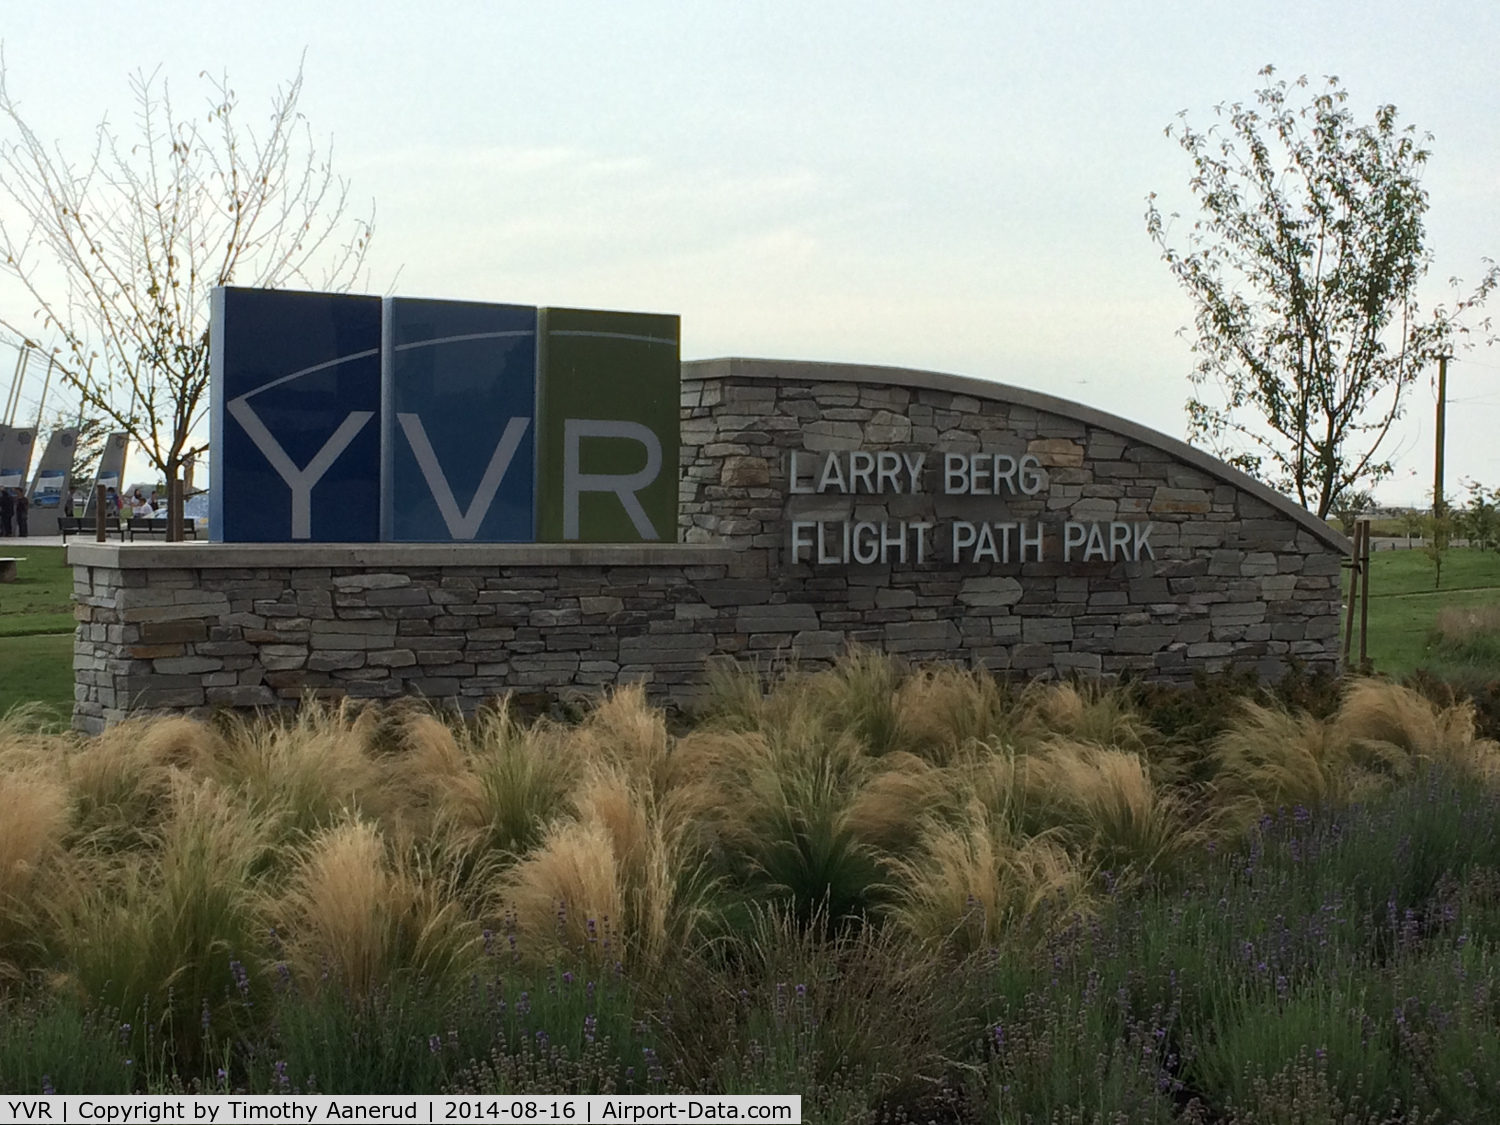 Vancouver International Airport, Vancouver, British Columbia Canada (YVR) - Larry Berg Flight Path Park sign